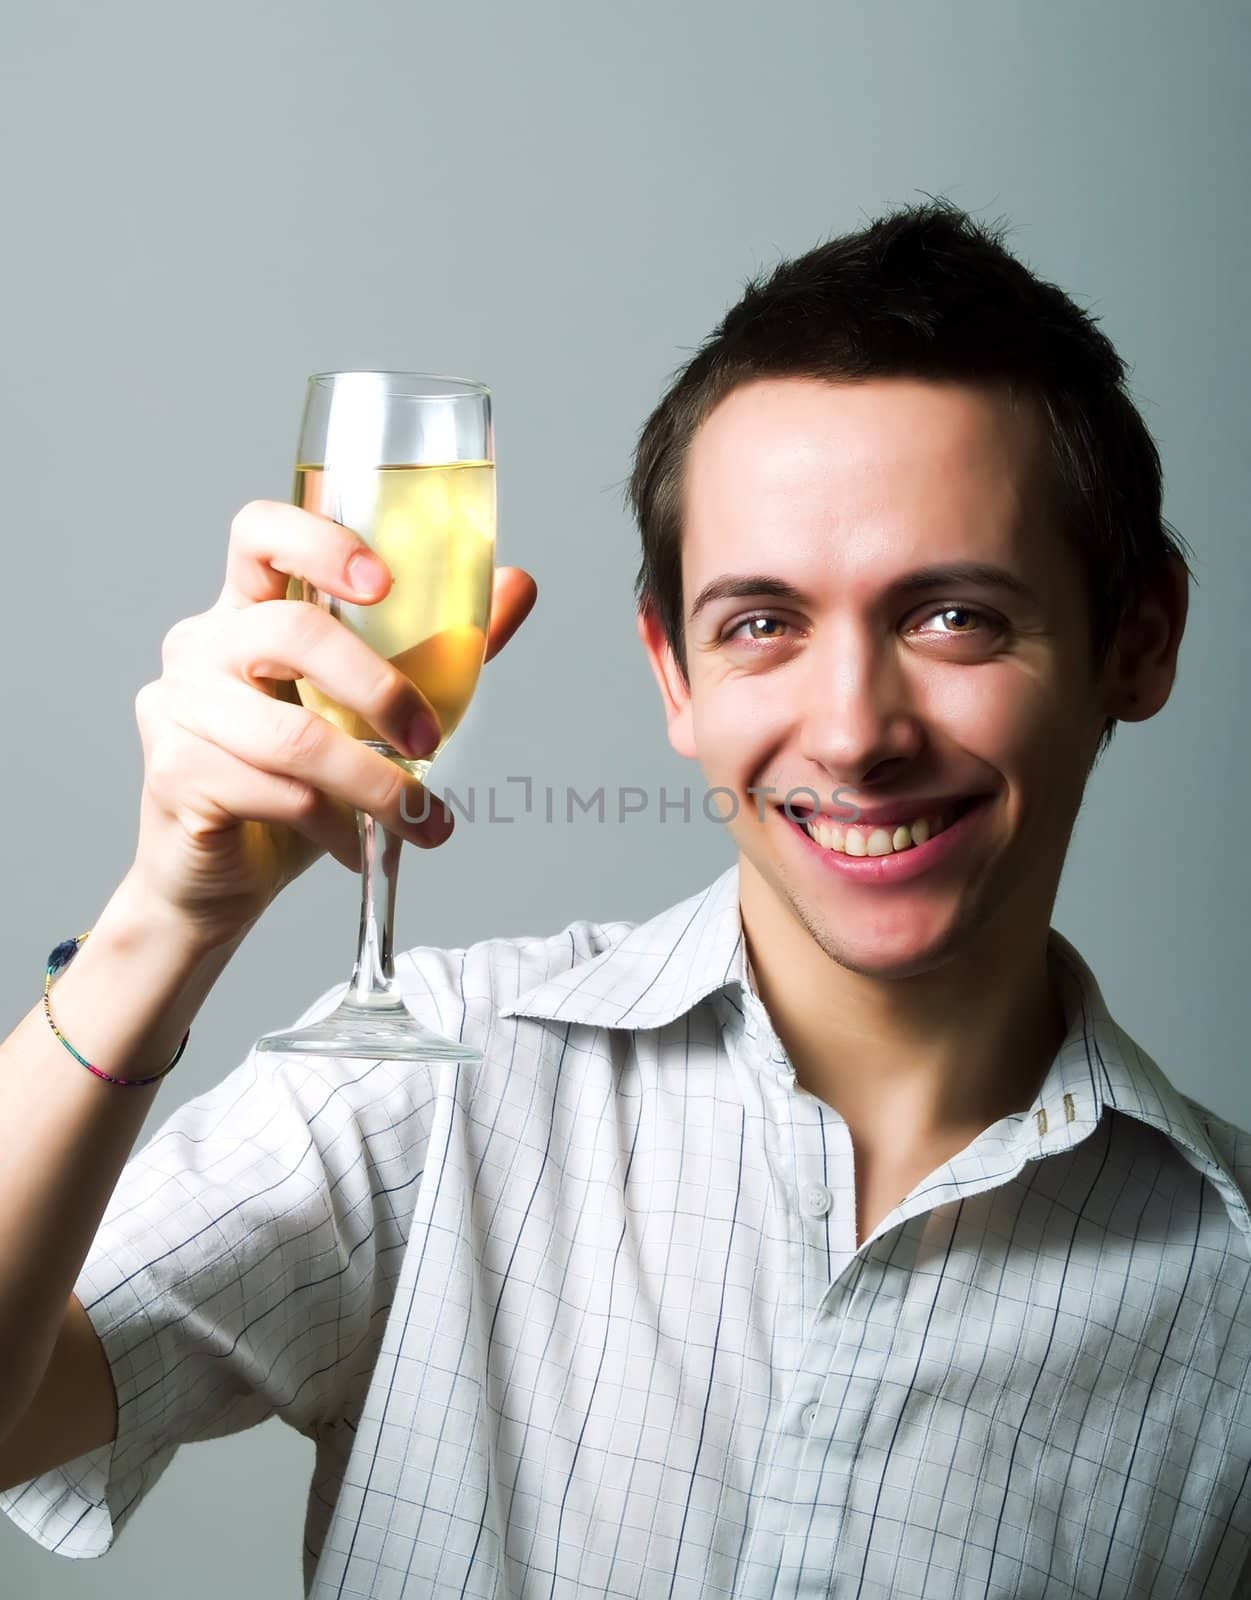 Drinking champaign by henrischmit